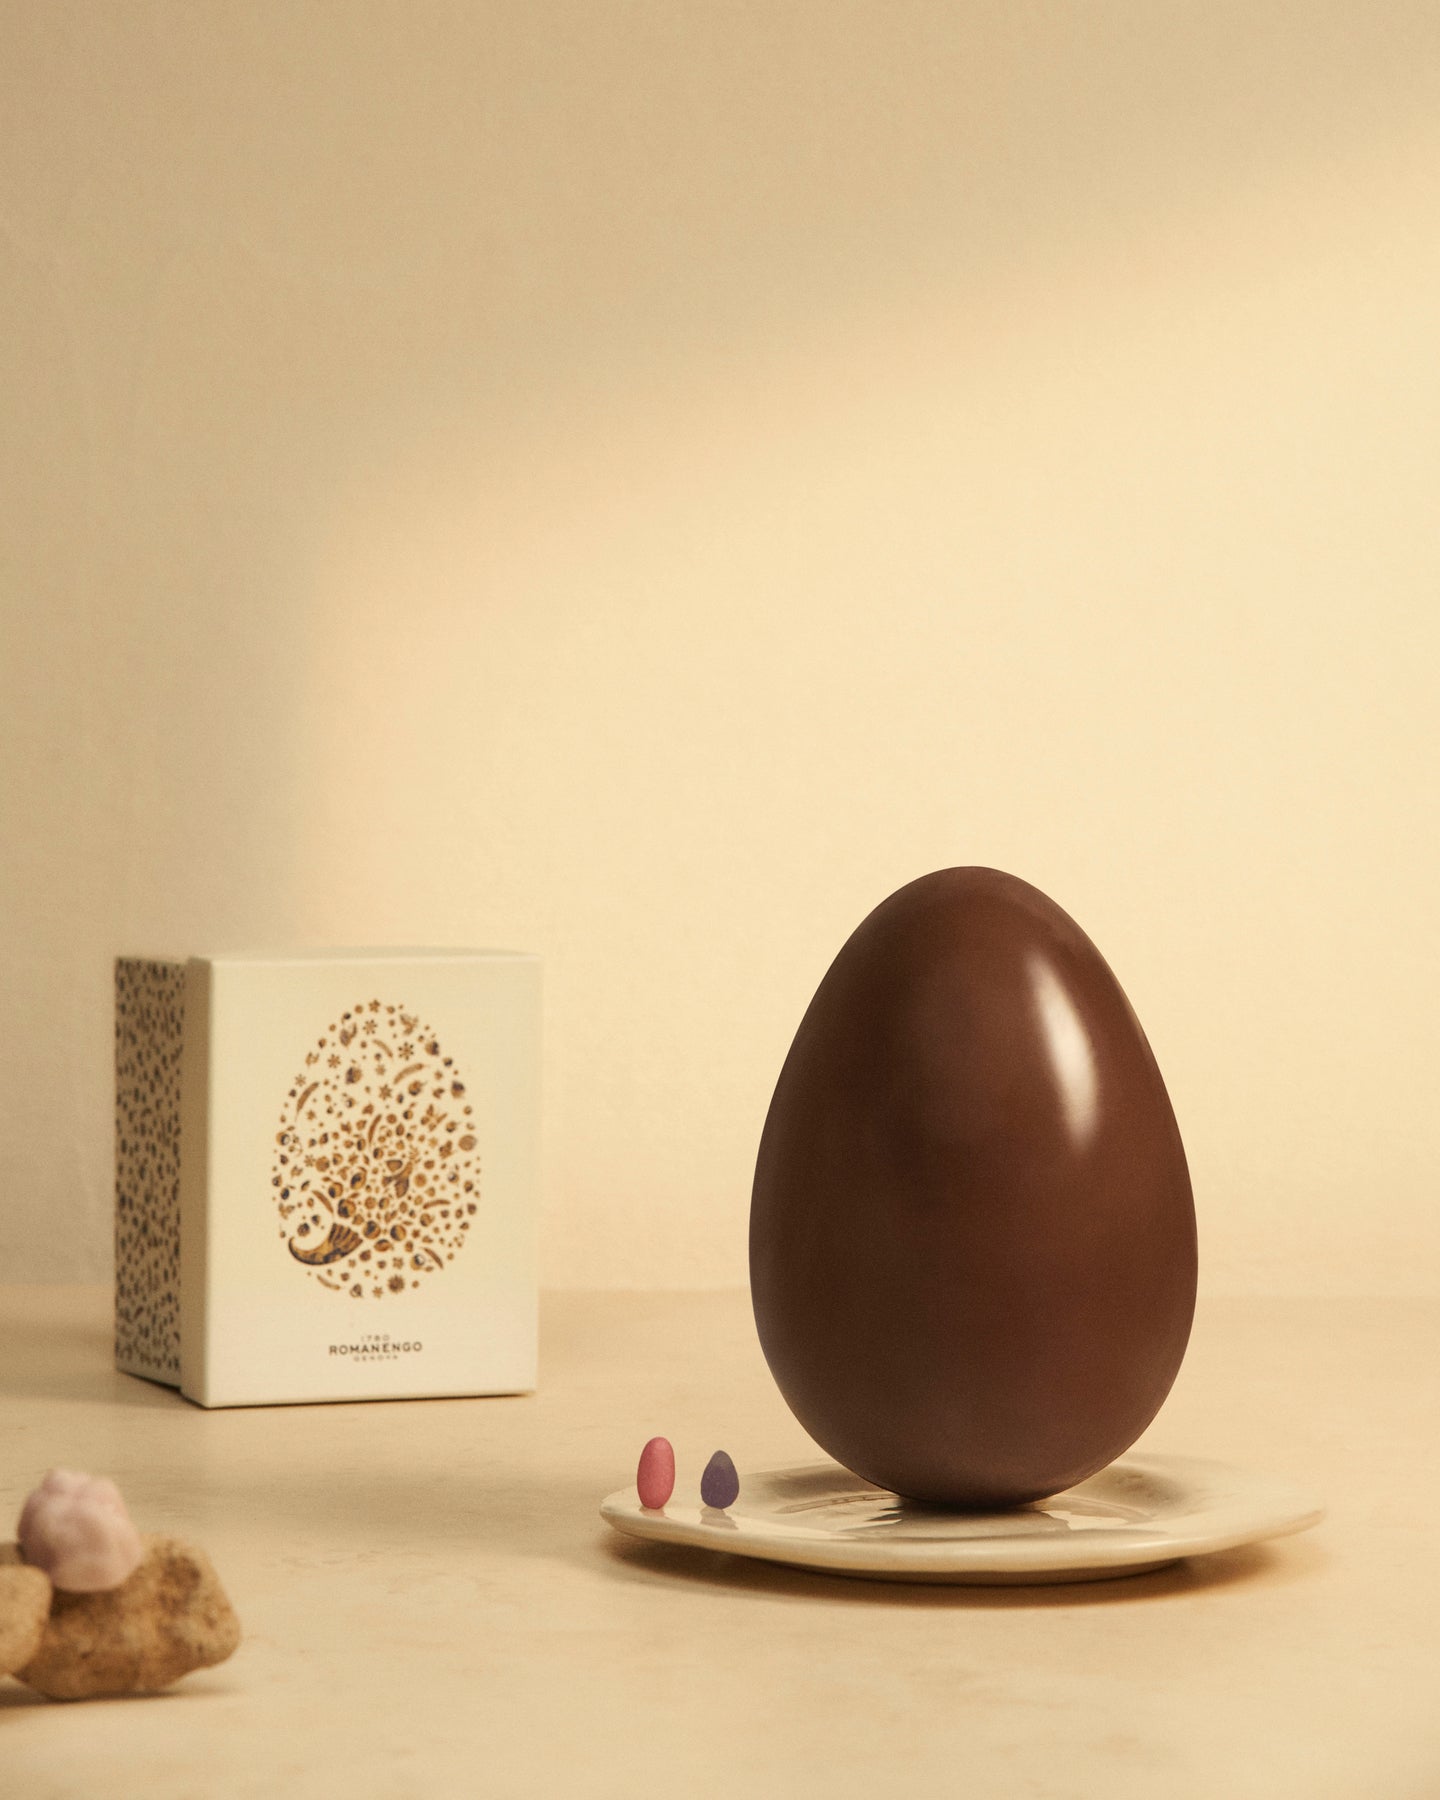 Dark Chocolate Eggs 51% with New Fantasy Box